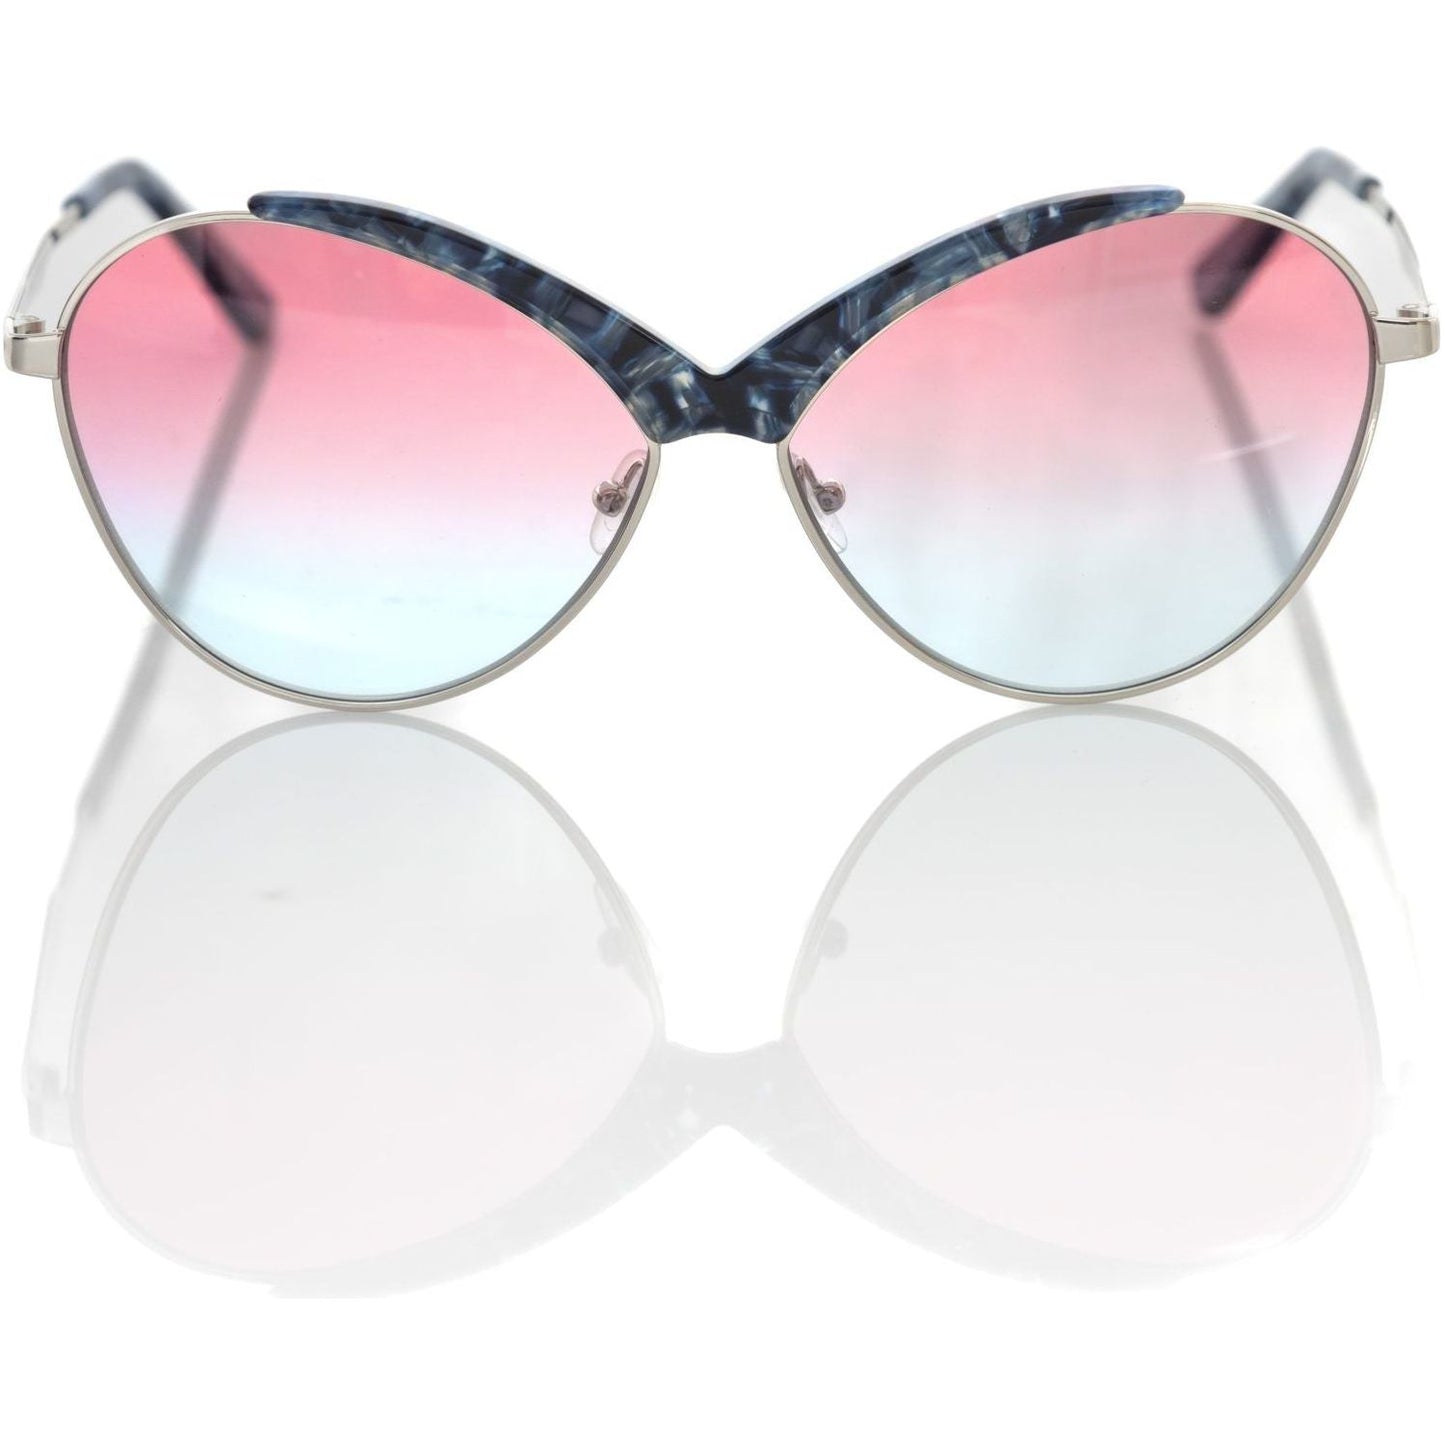 Butterfly Shaped Metallic Framed Sunglasses Frankie Morello